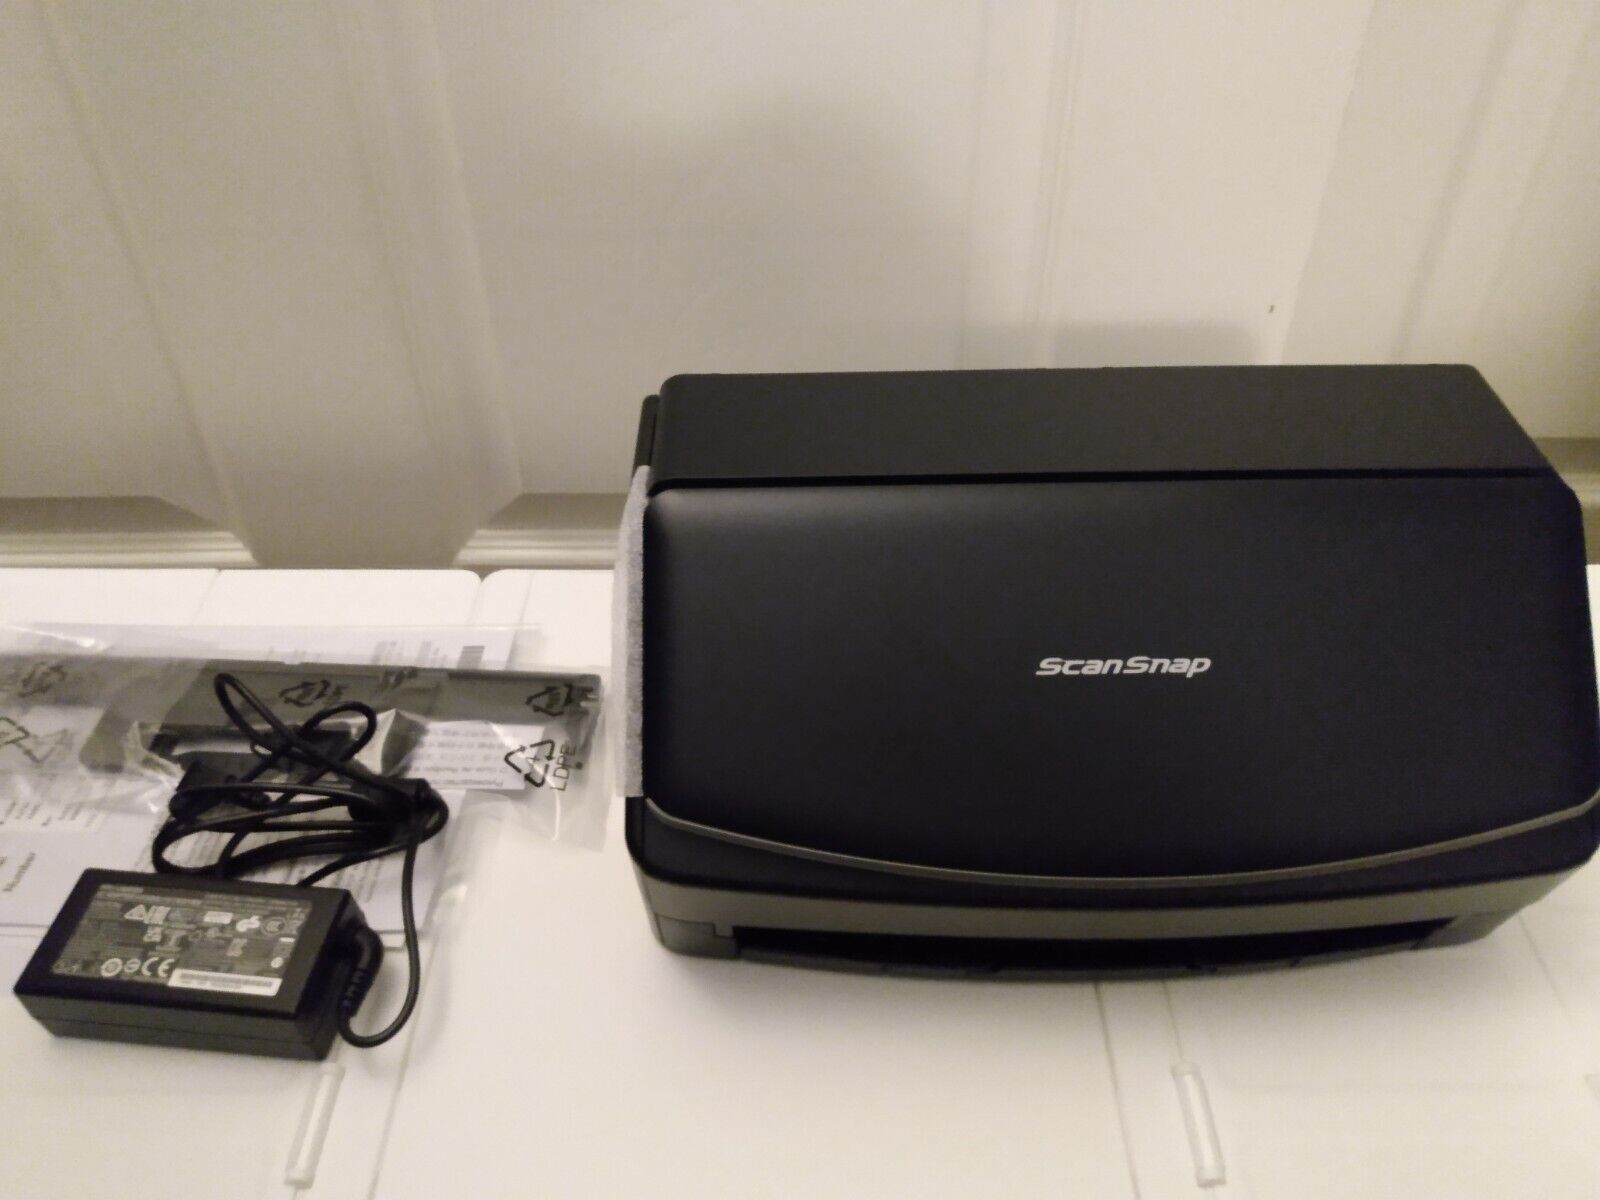 Fujitsu ScanSnap iX1600 Large Format ADF Scanner - Black - New Complete Open Box